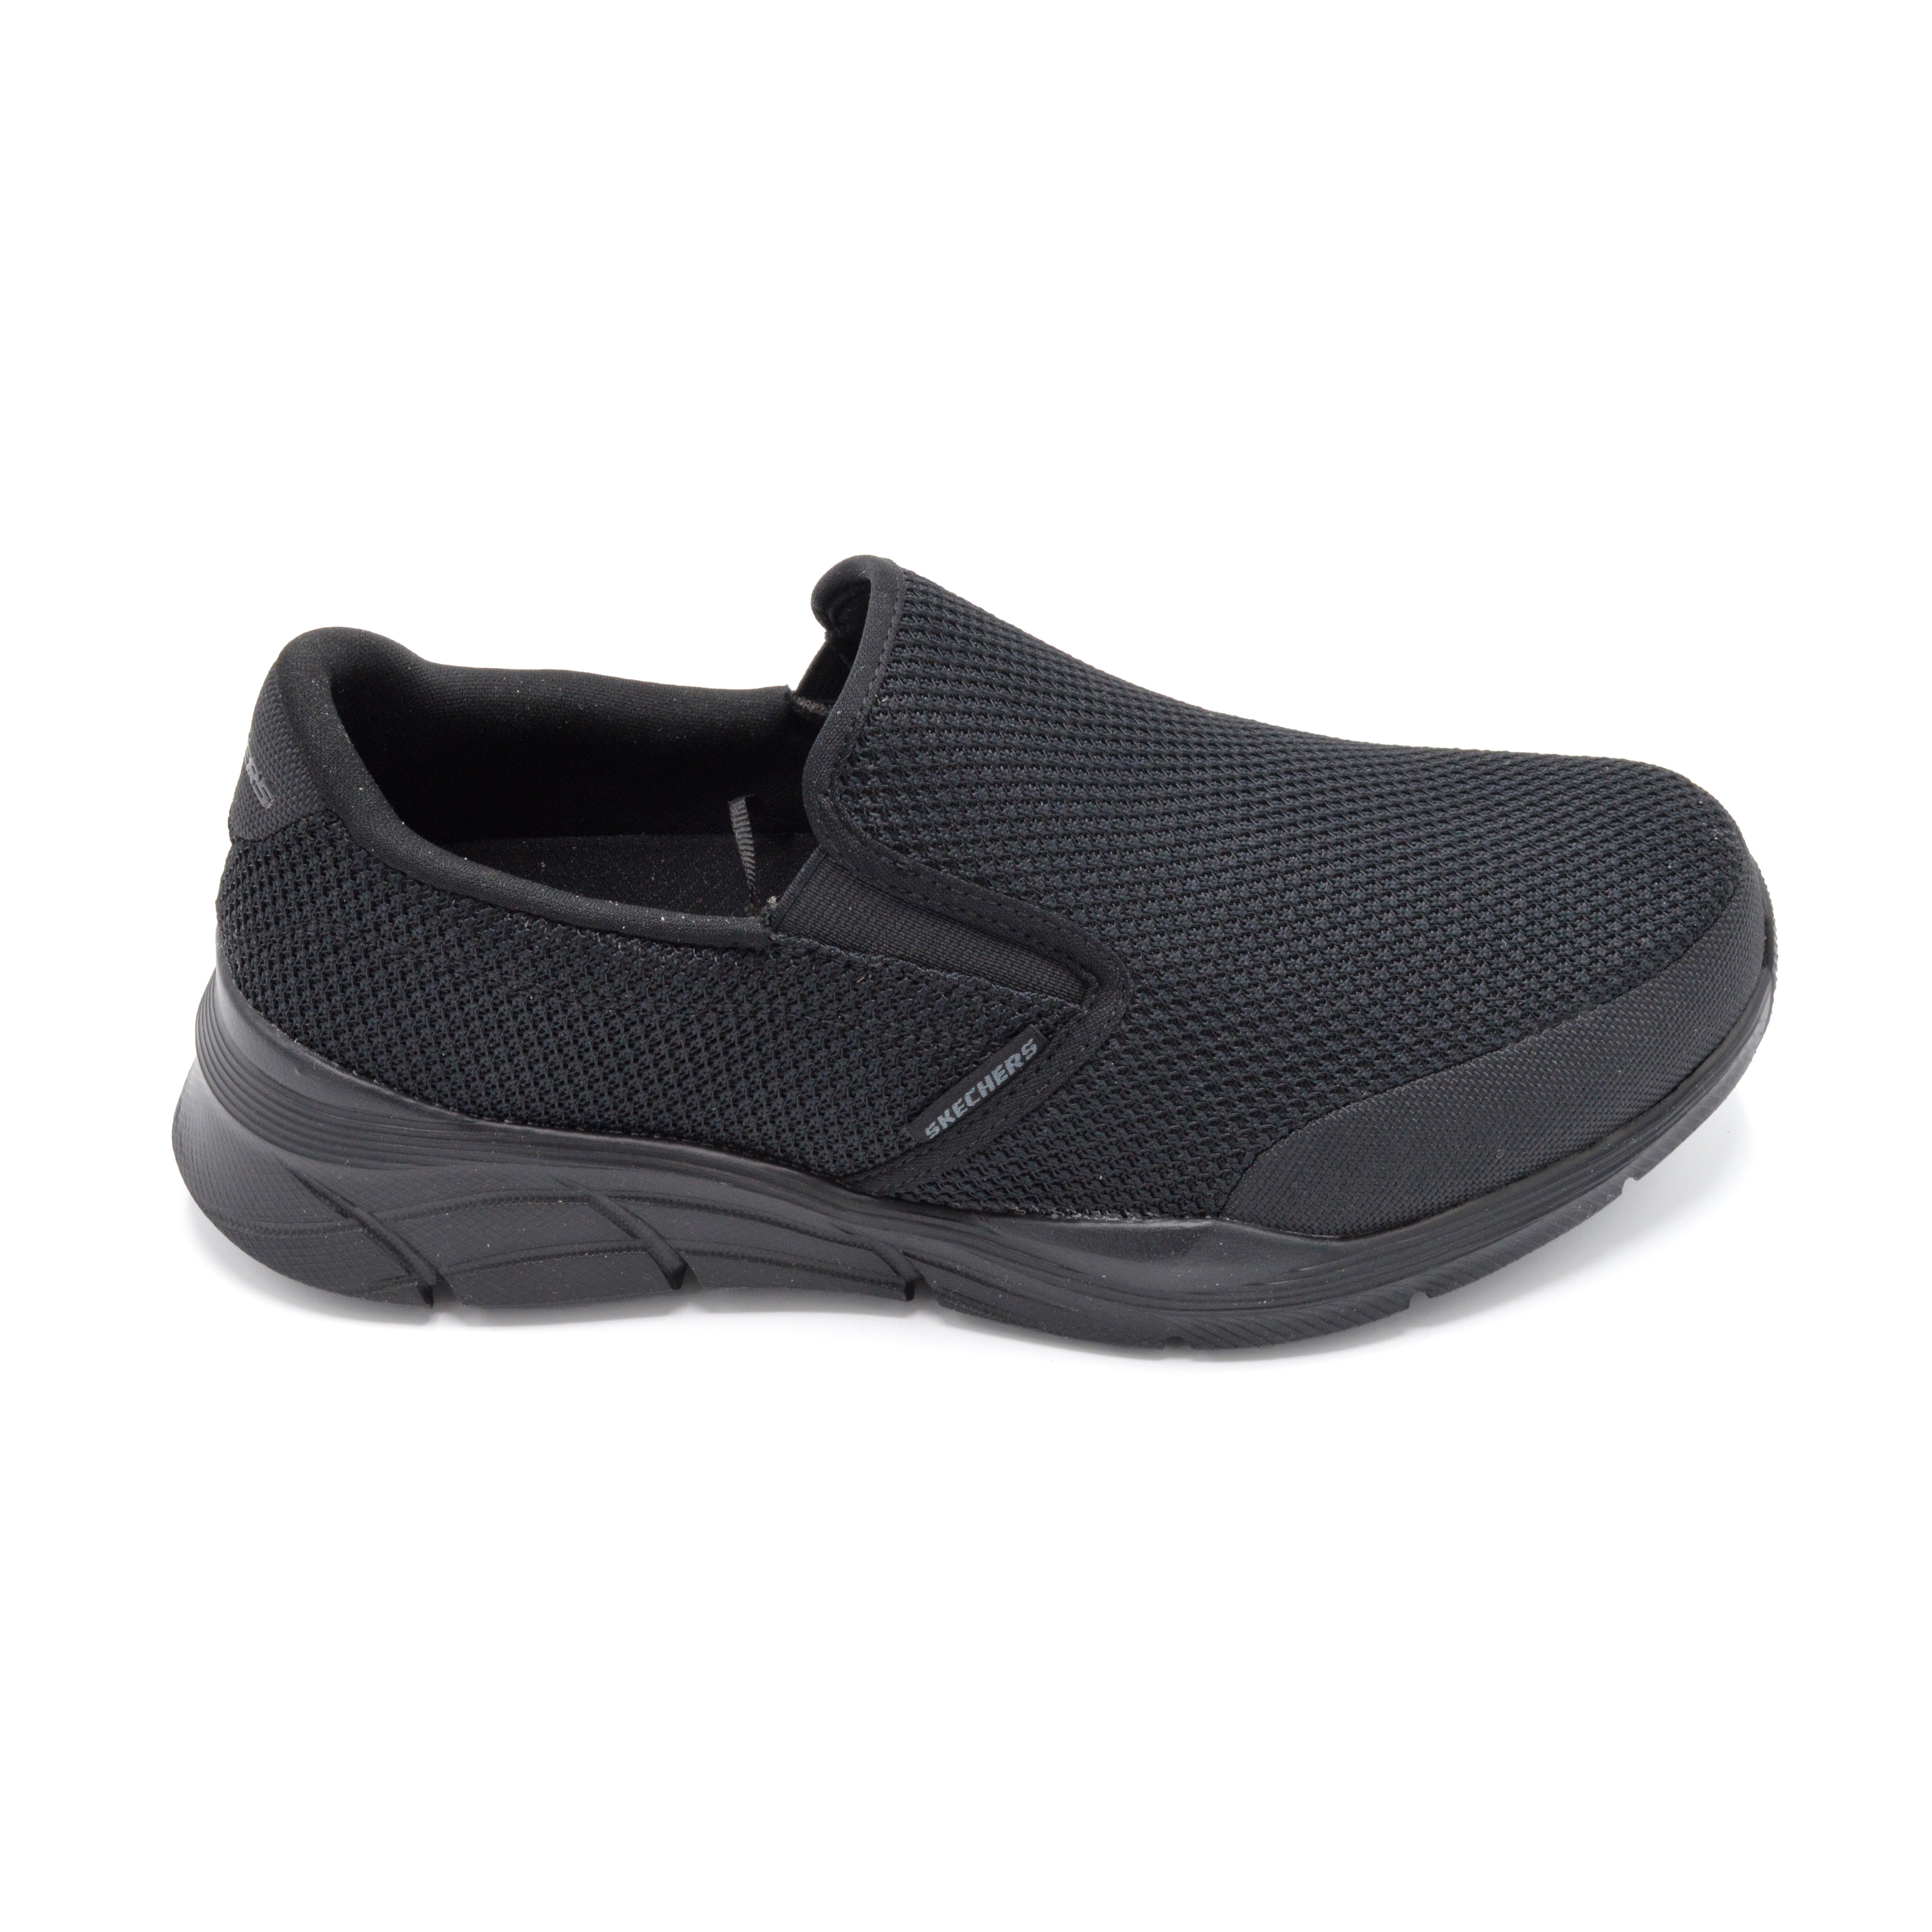 Skechers Krimlin -Extra Wide On - Black - 6E Fit — Wide Shoes